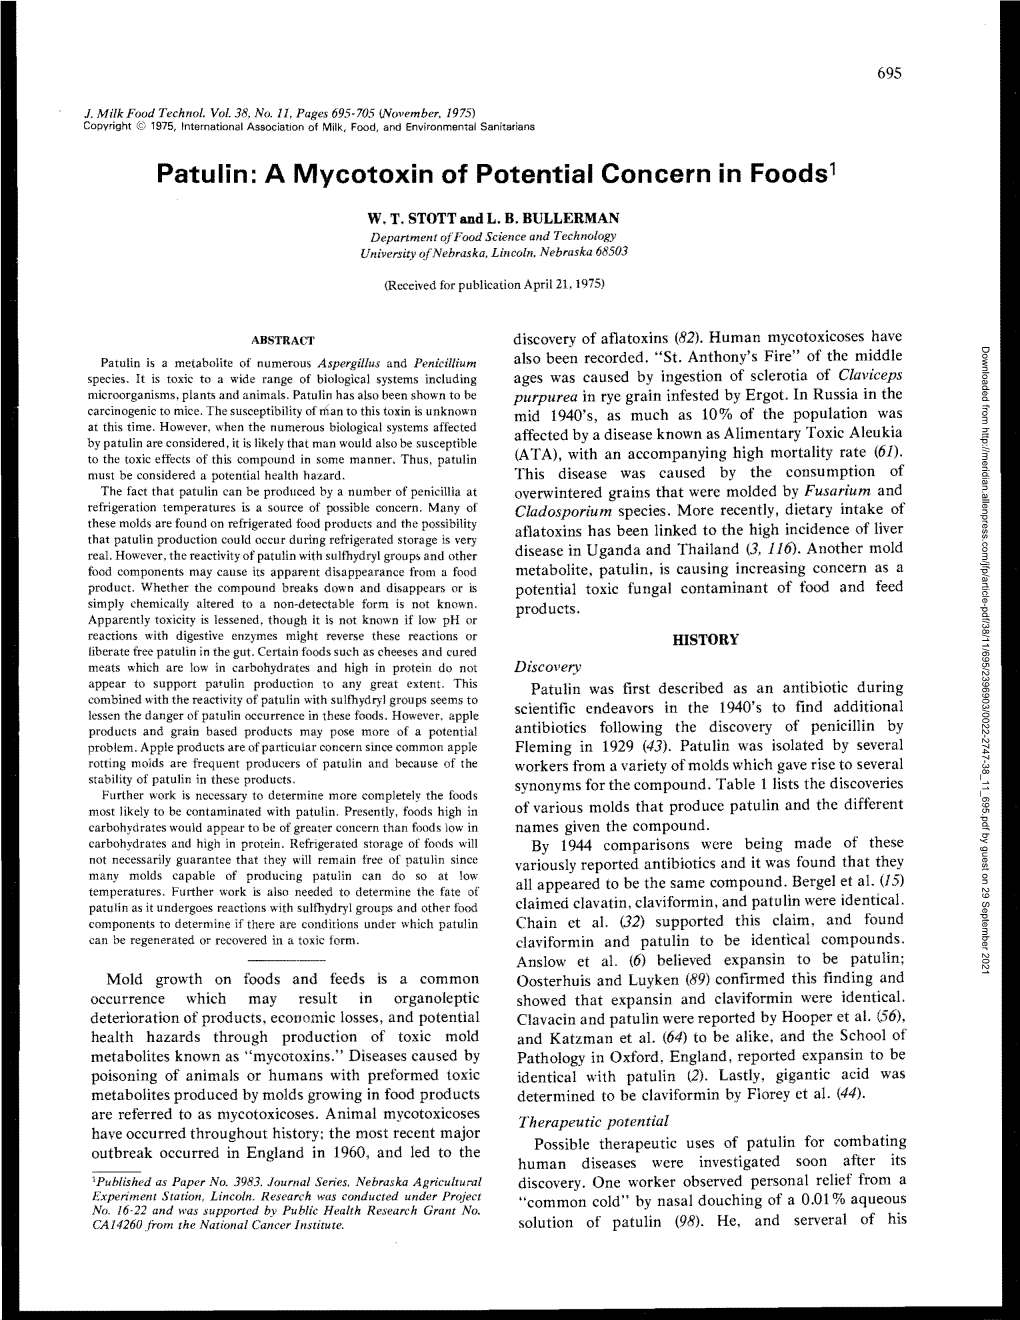 Patulin: a Mycotoxin of Potential Concern in Foods1